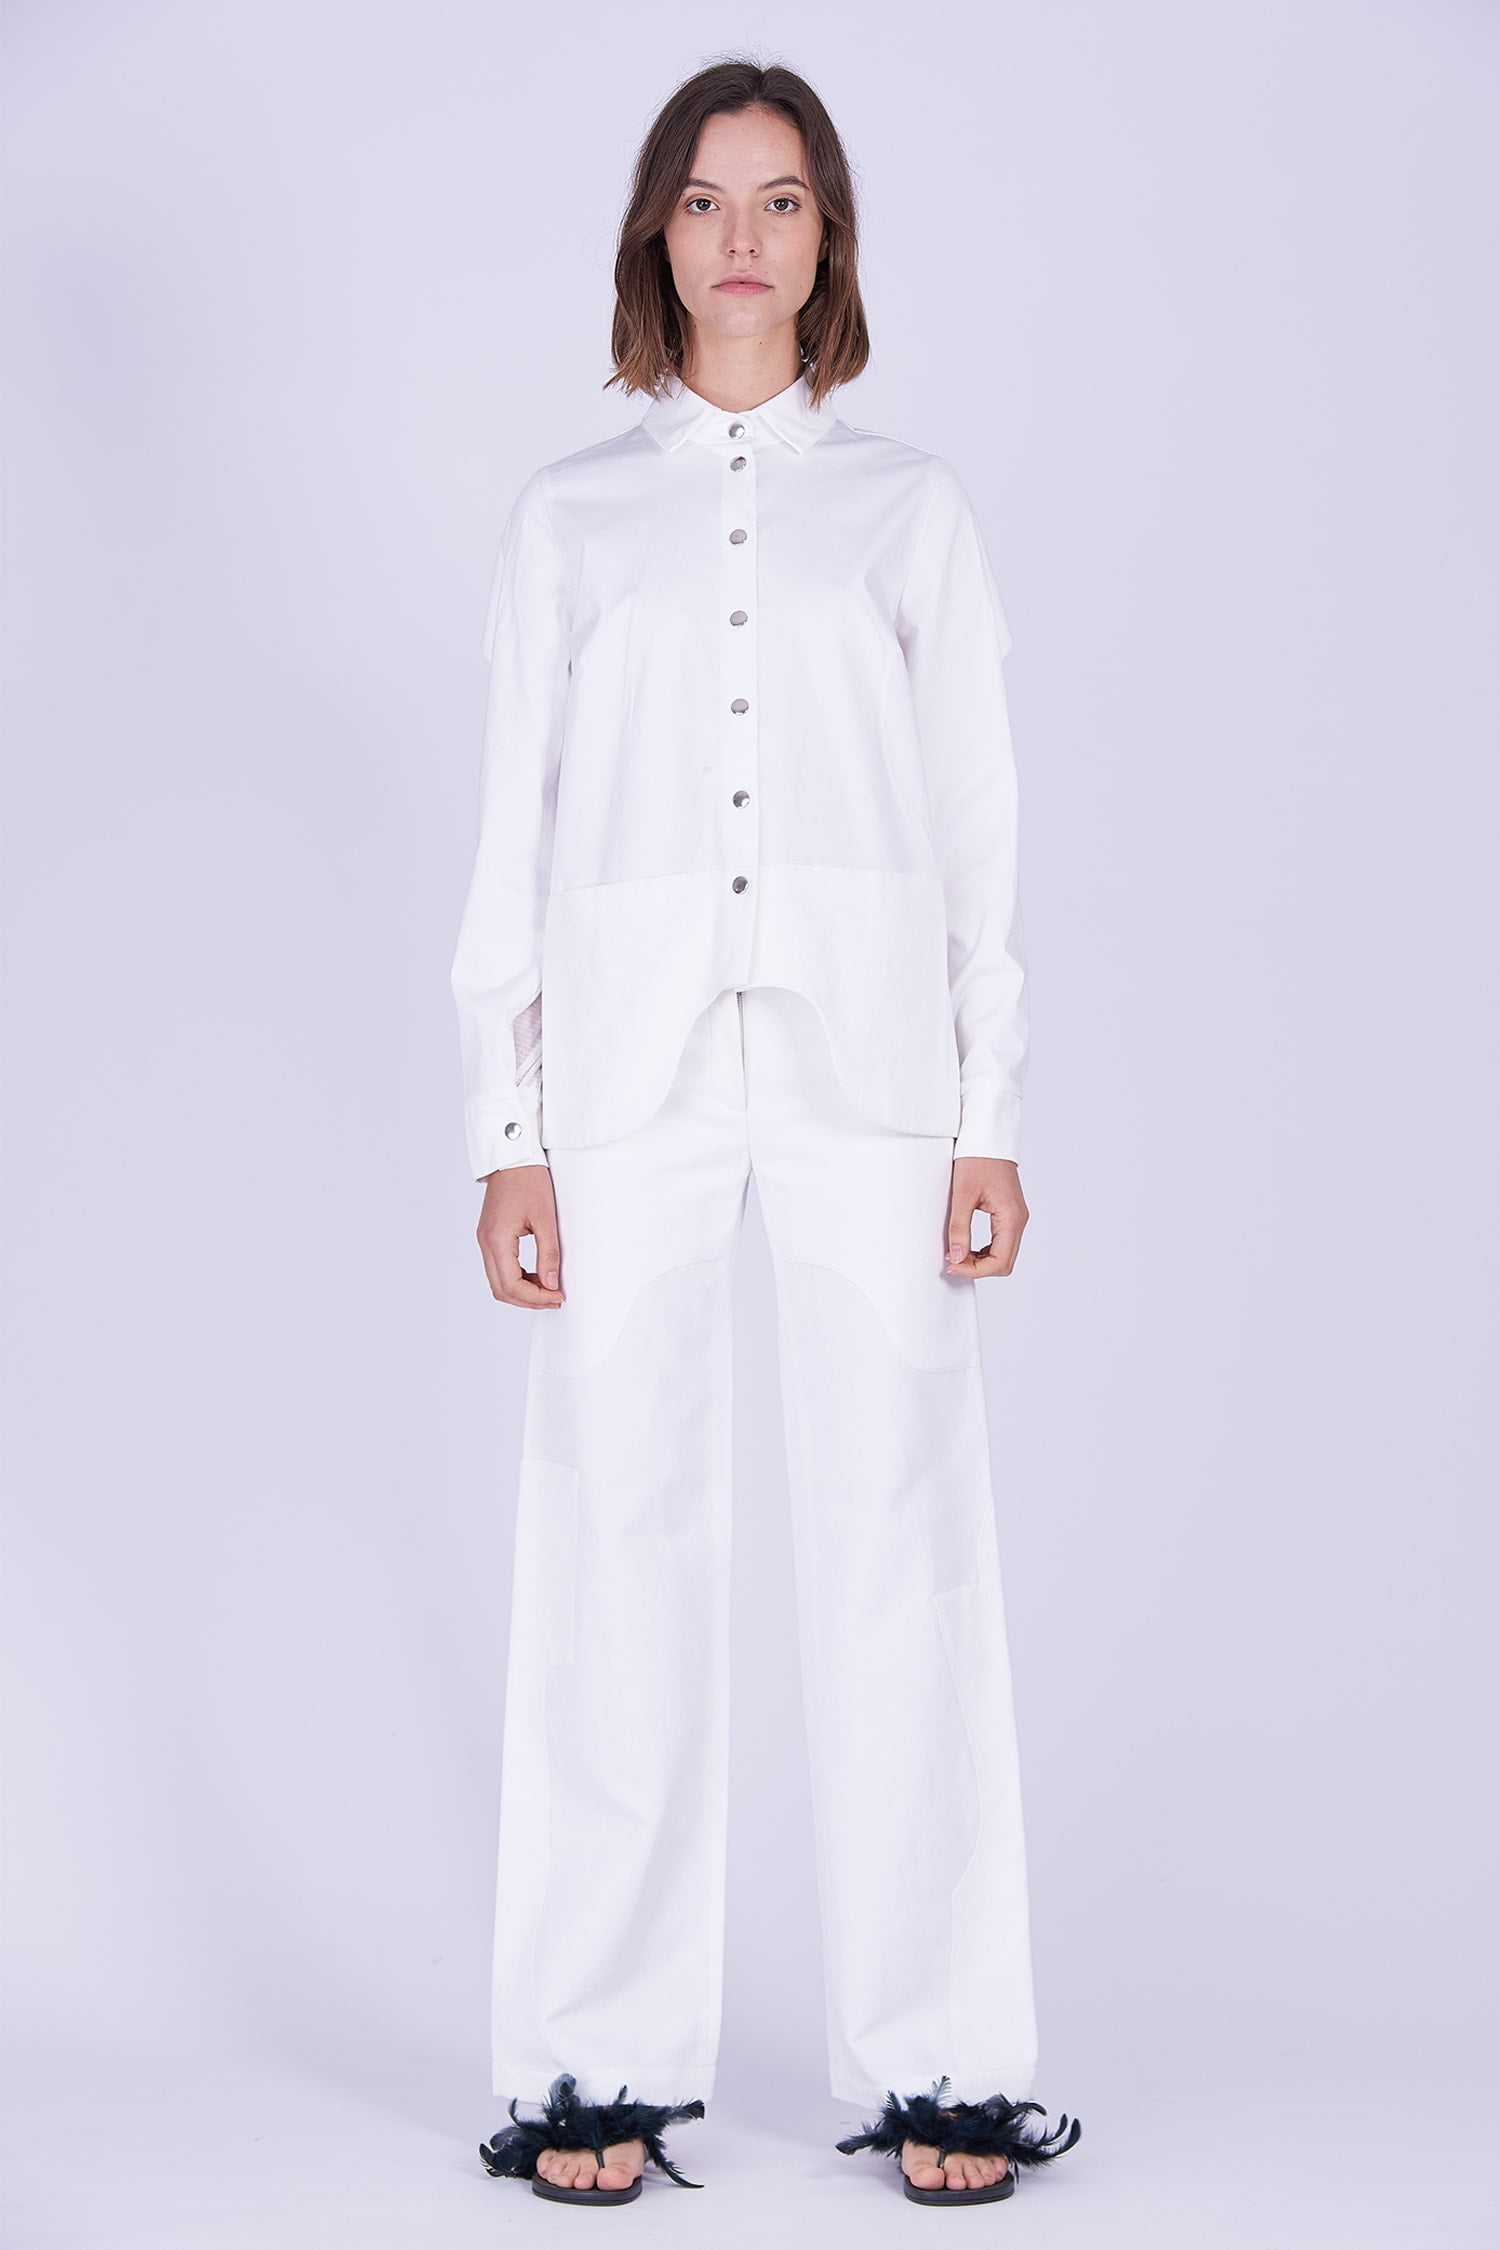 Acephala Ps2020 White Shirt White Trousers Front